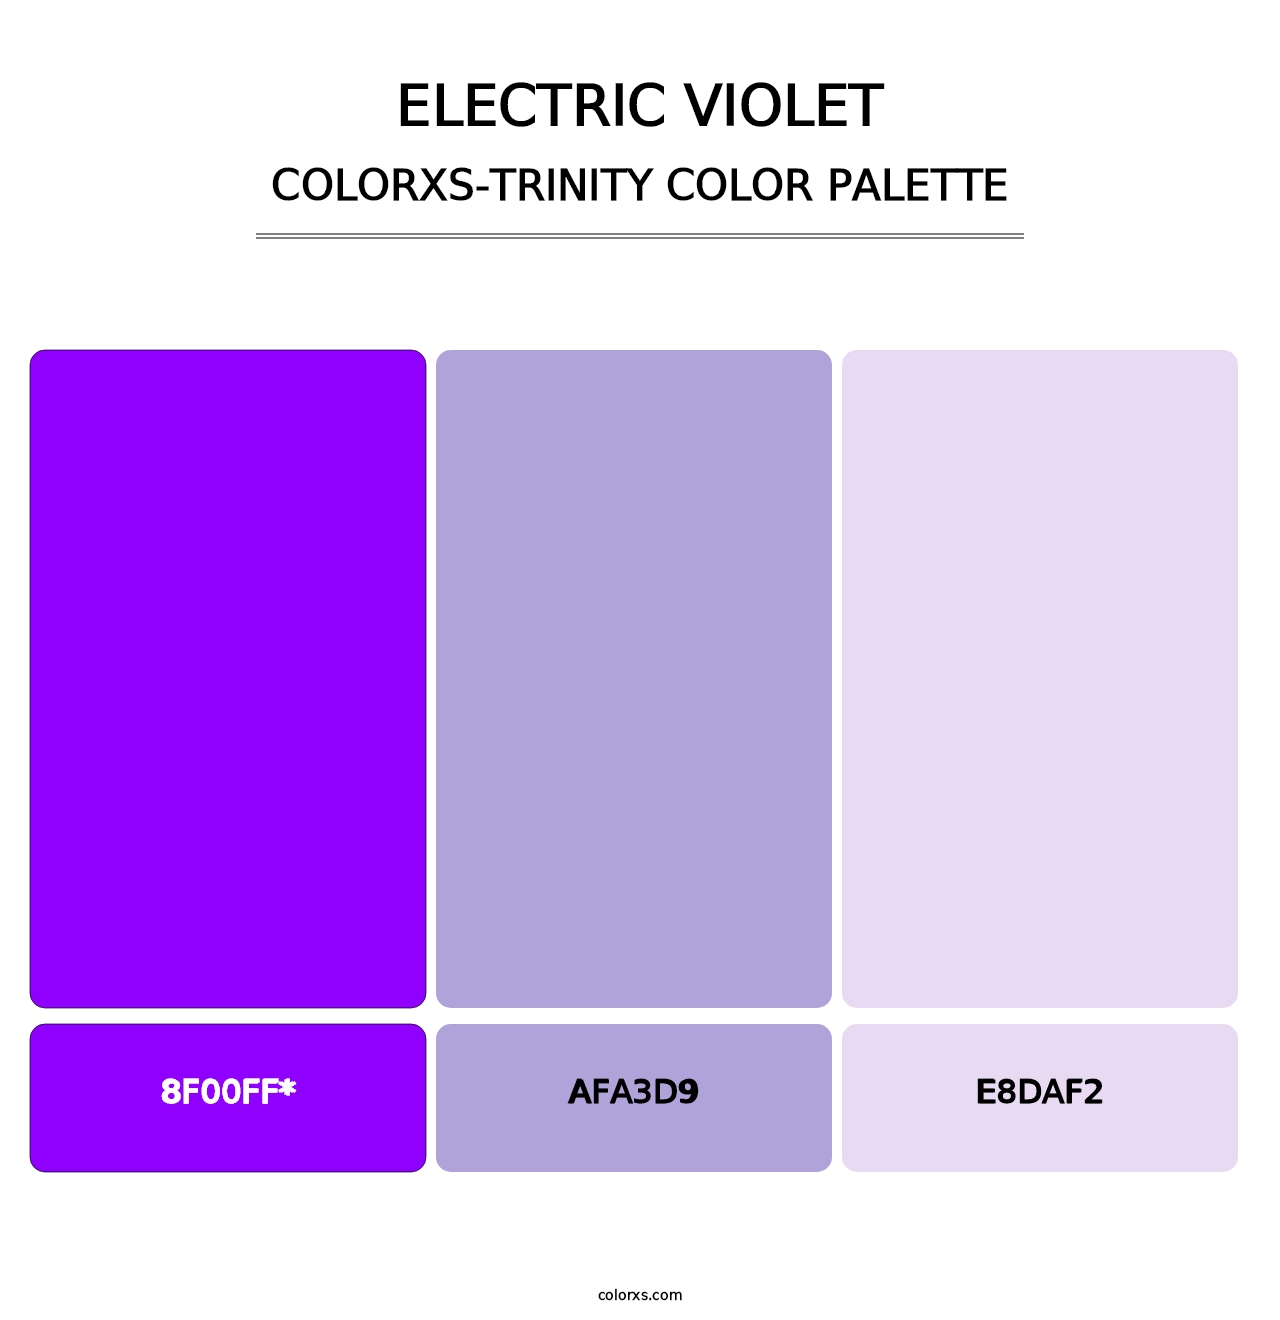 Electric Violet - Colorxs Trinity Palette